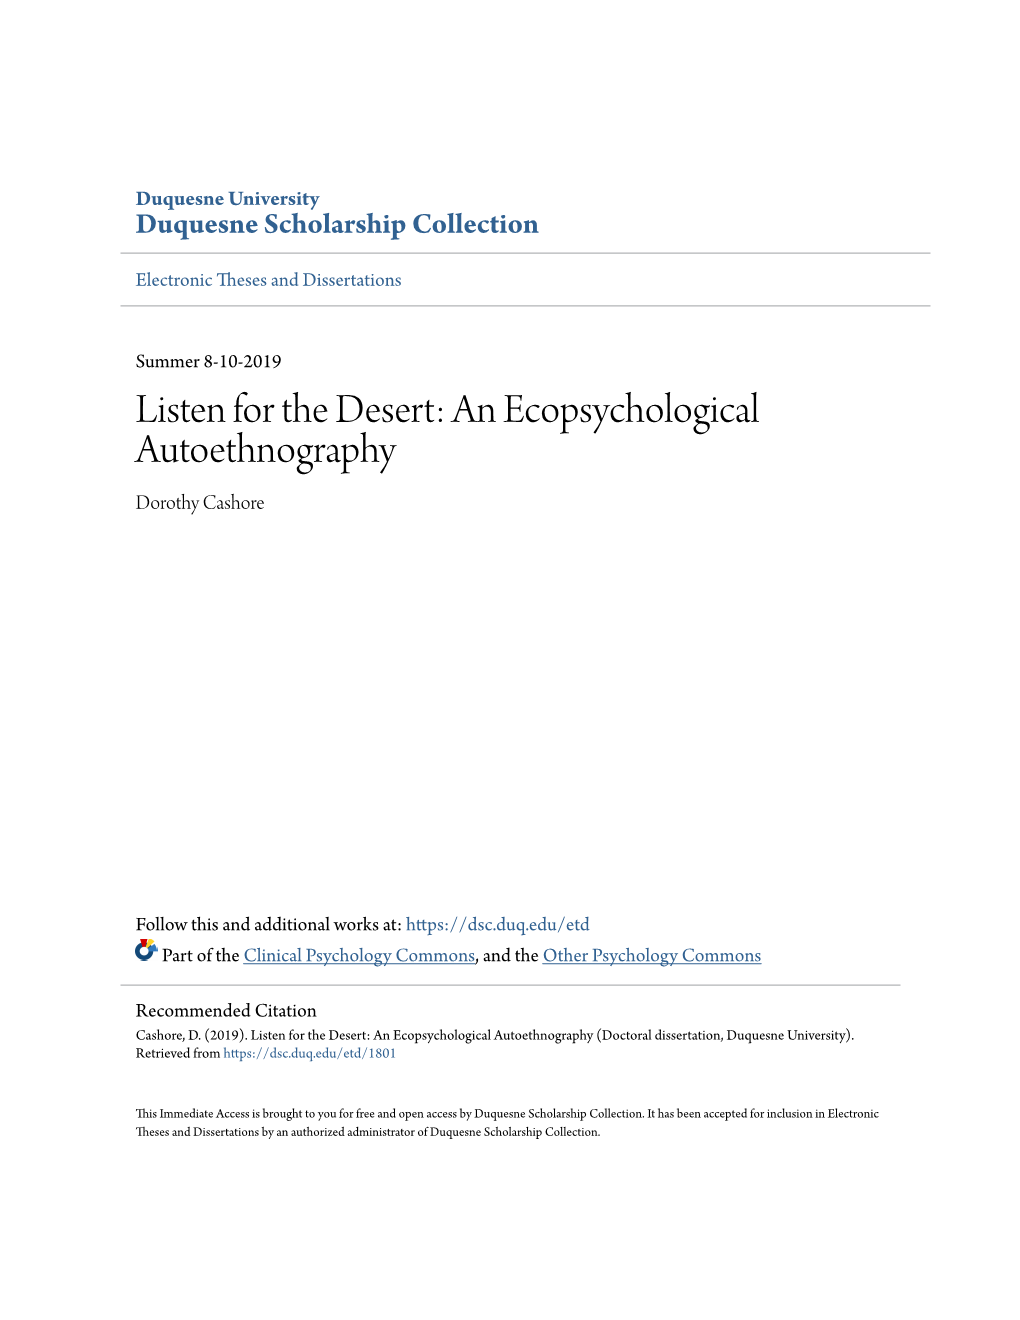 An Ecopsychological Autoethnography Dorothy Cashore